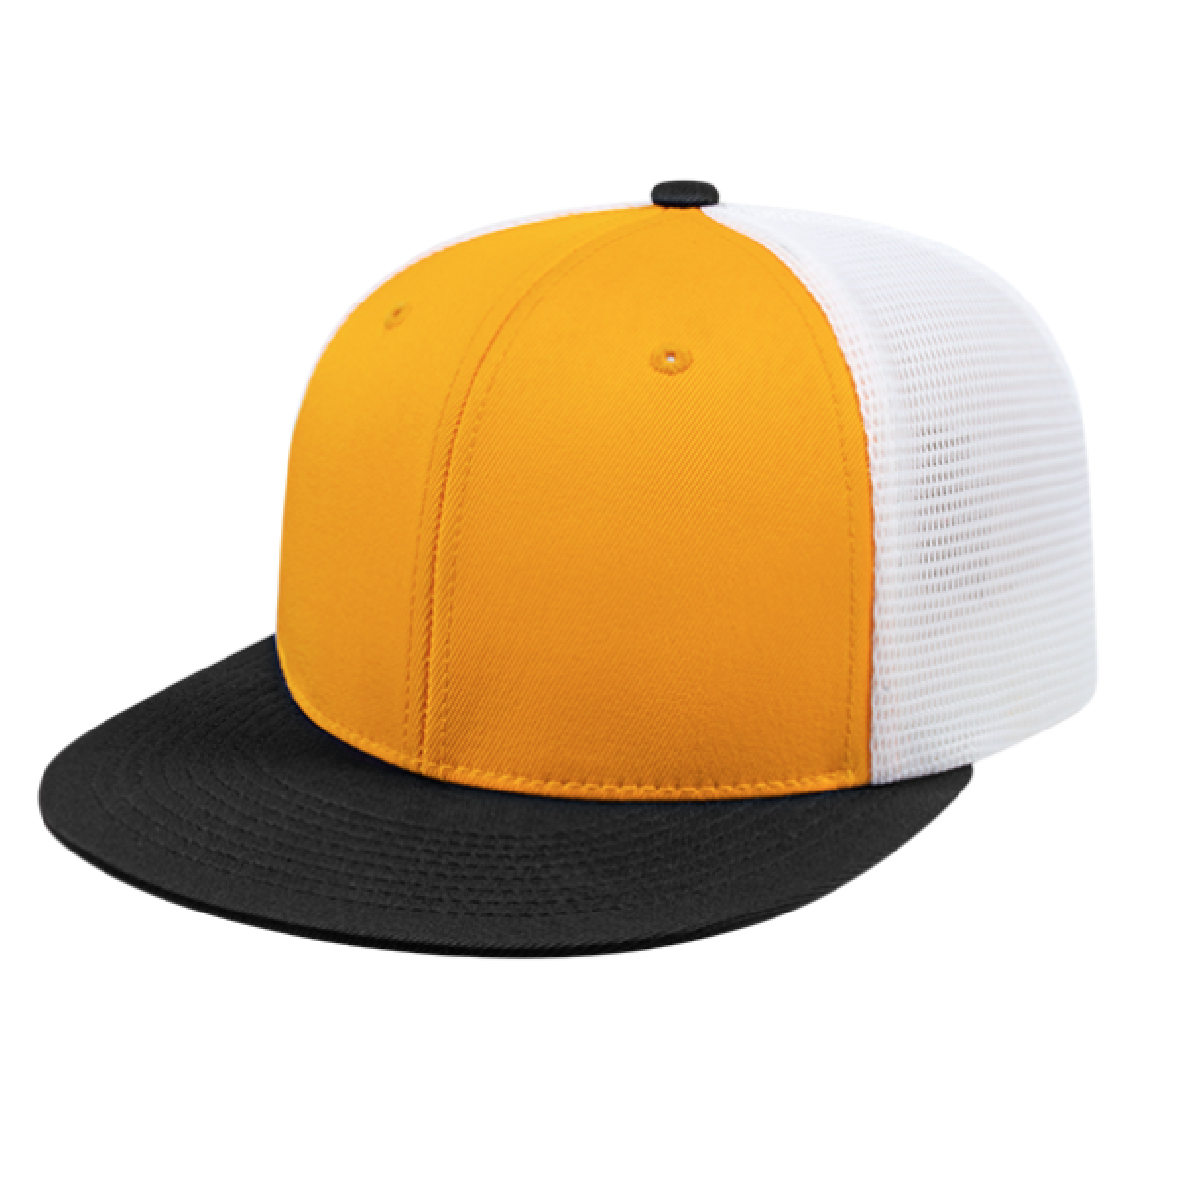 Athletic Gold/Black/White Flexfit® Performance Trucker Mesh Back Cap